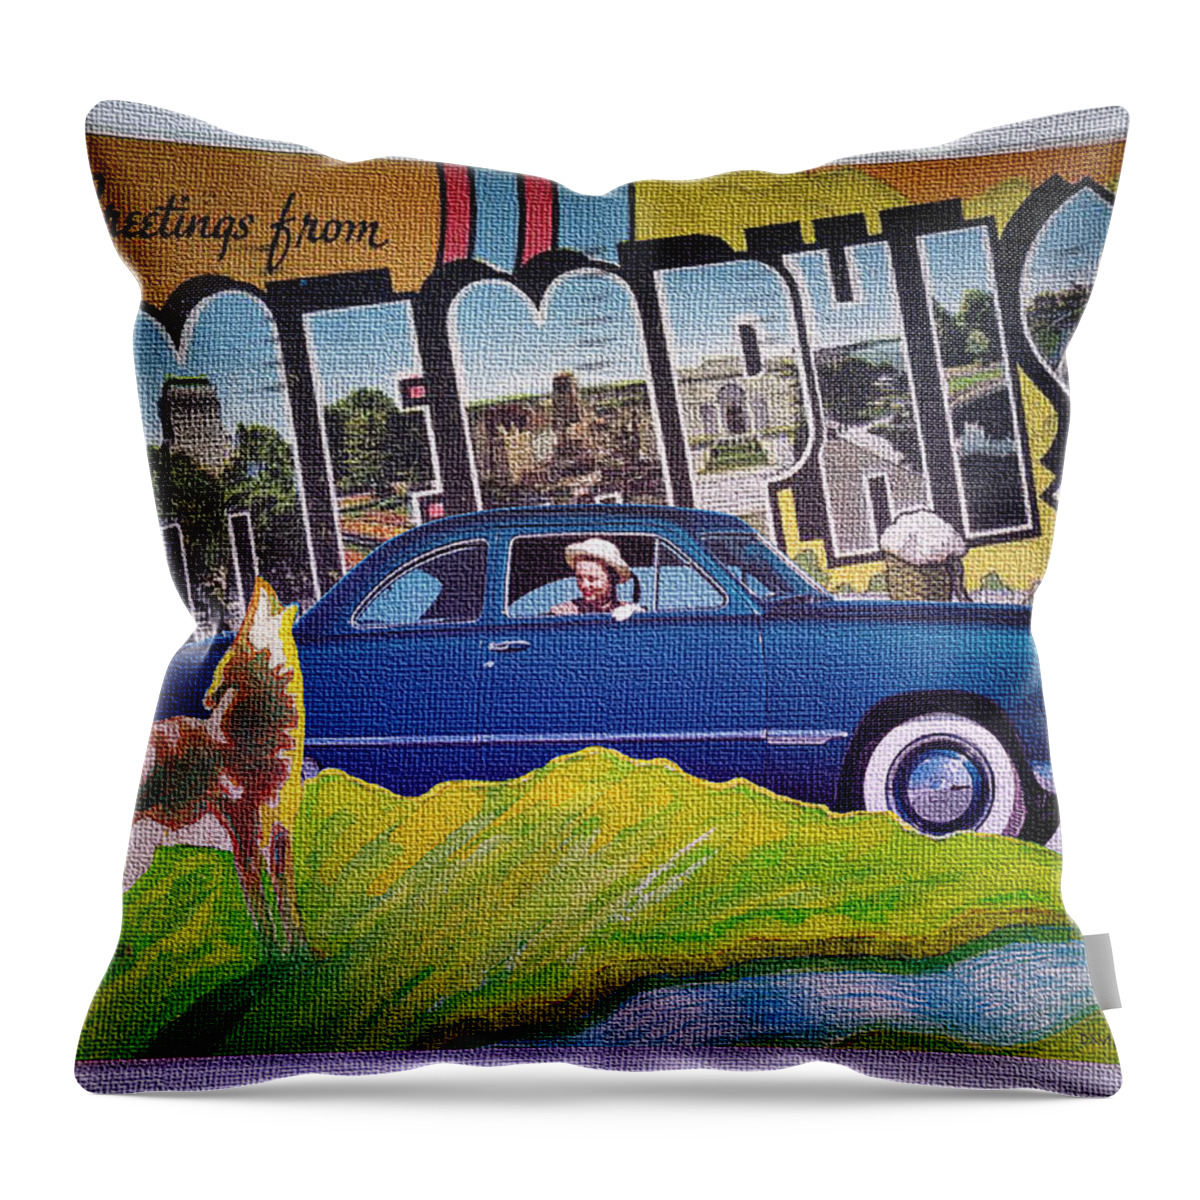 Dixie Road Trips Throw Pillow featuring the digital art Dixie Road Trips / Memphis by David Squibb